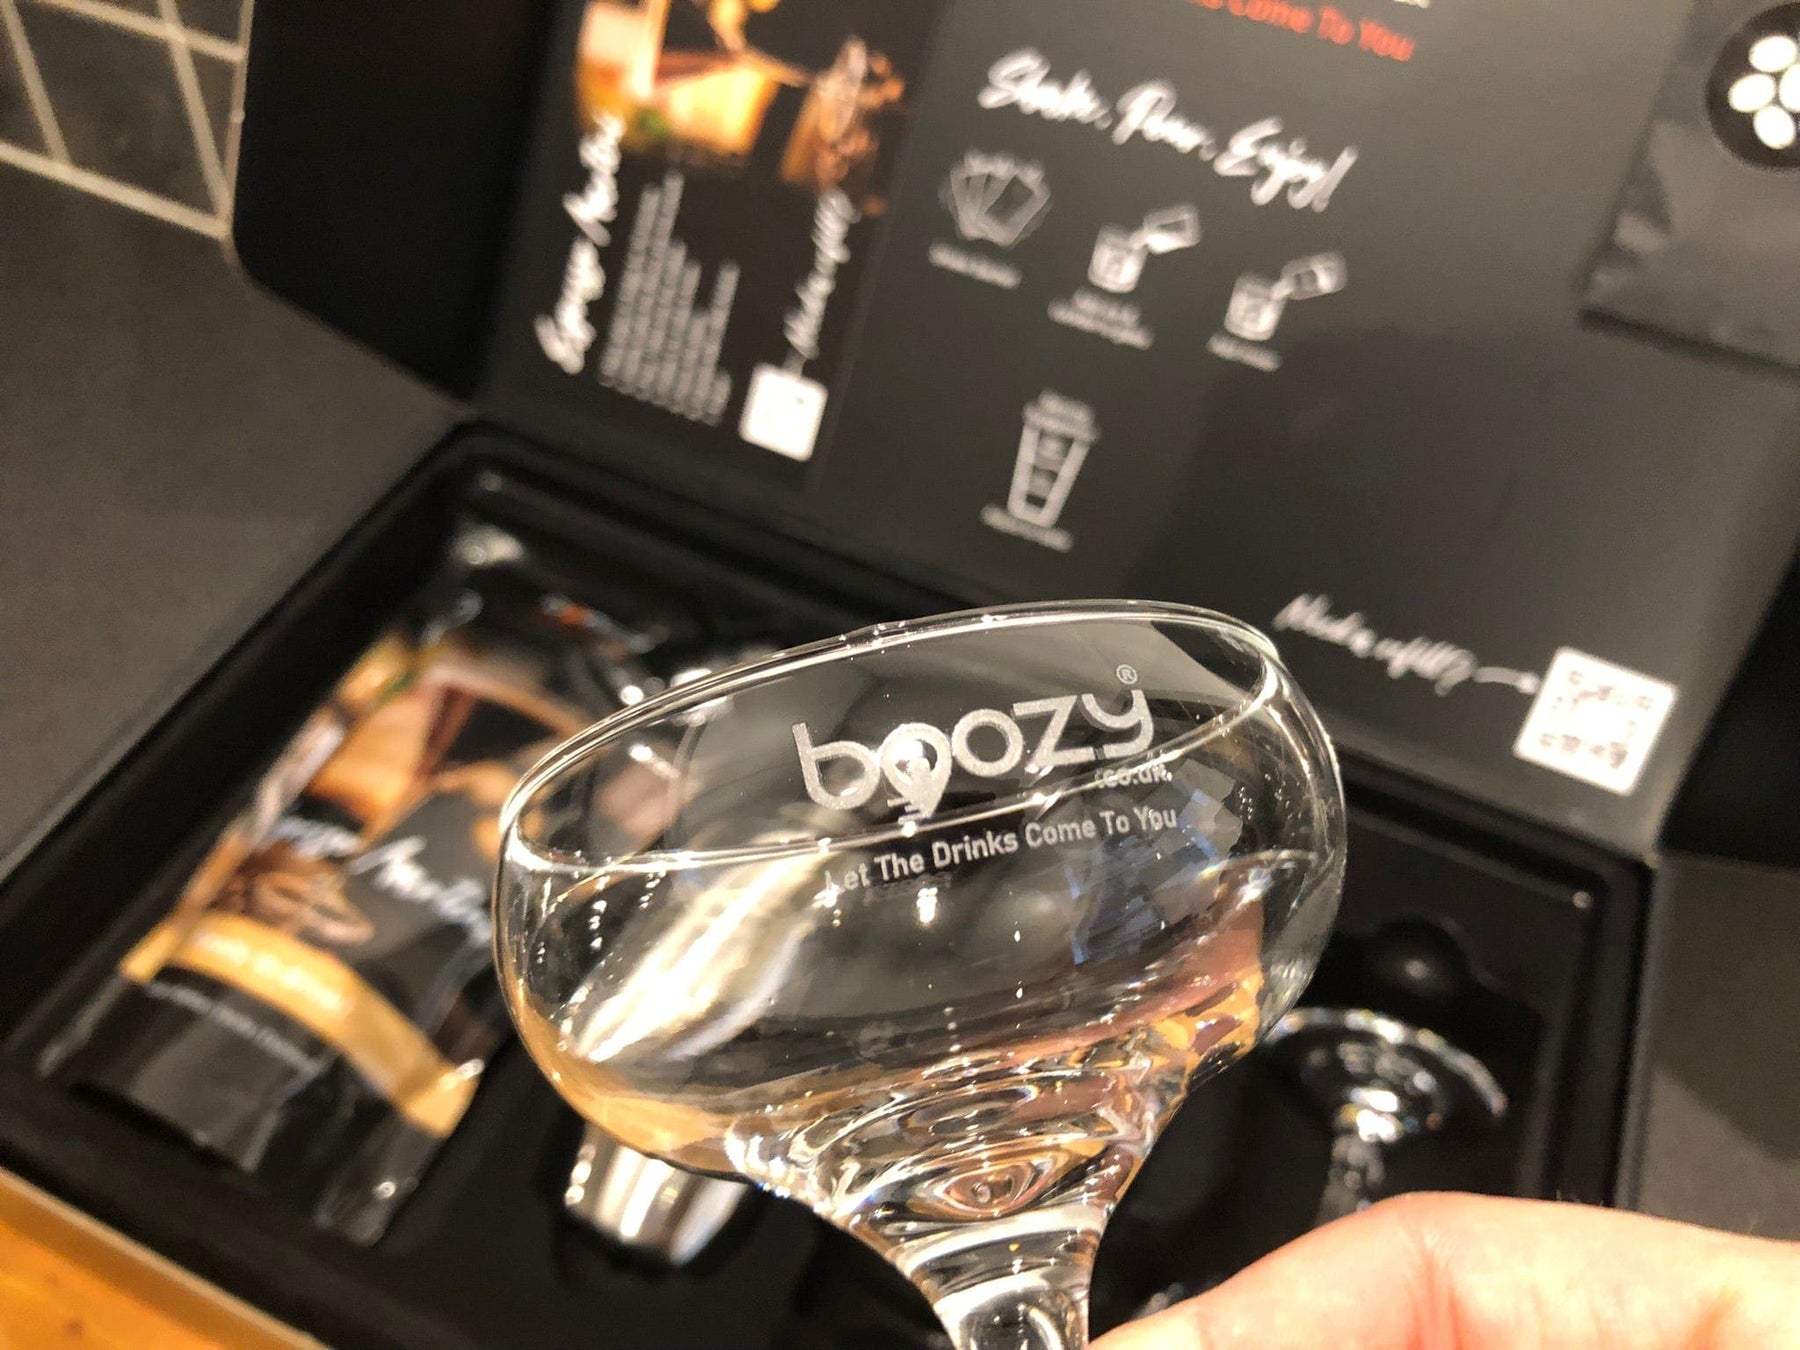 Boozy Espresso Martini Cocktail Kit With Shaker & Glasses In Gift Box - Boozy